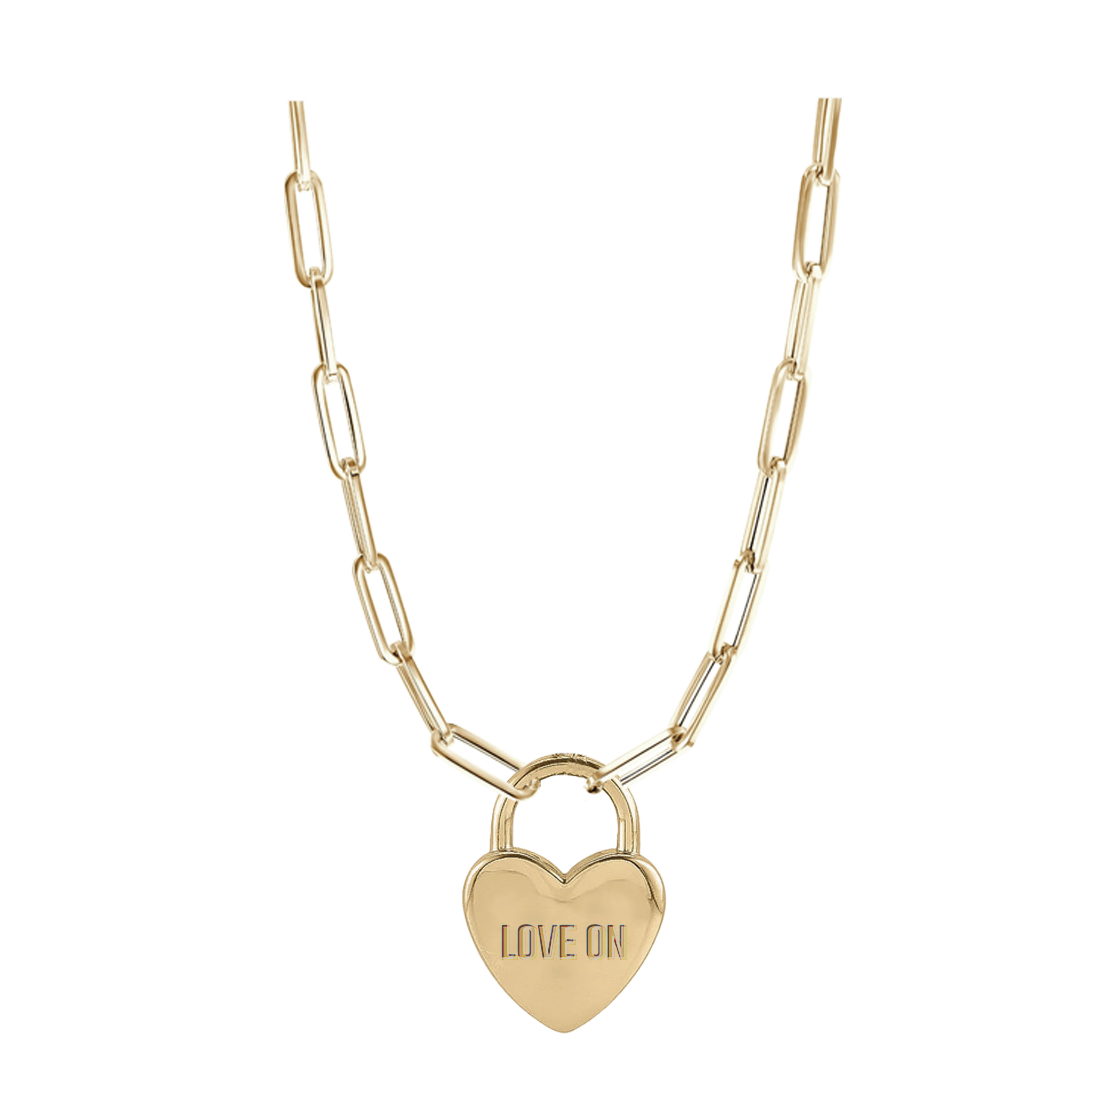 lovers heart lock and key necklace| Alibaba.com